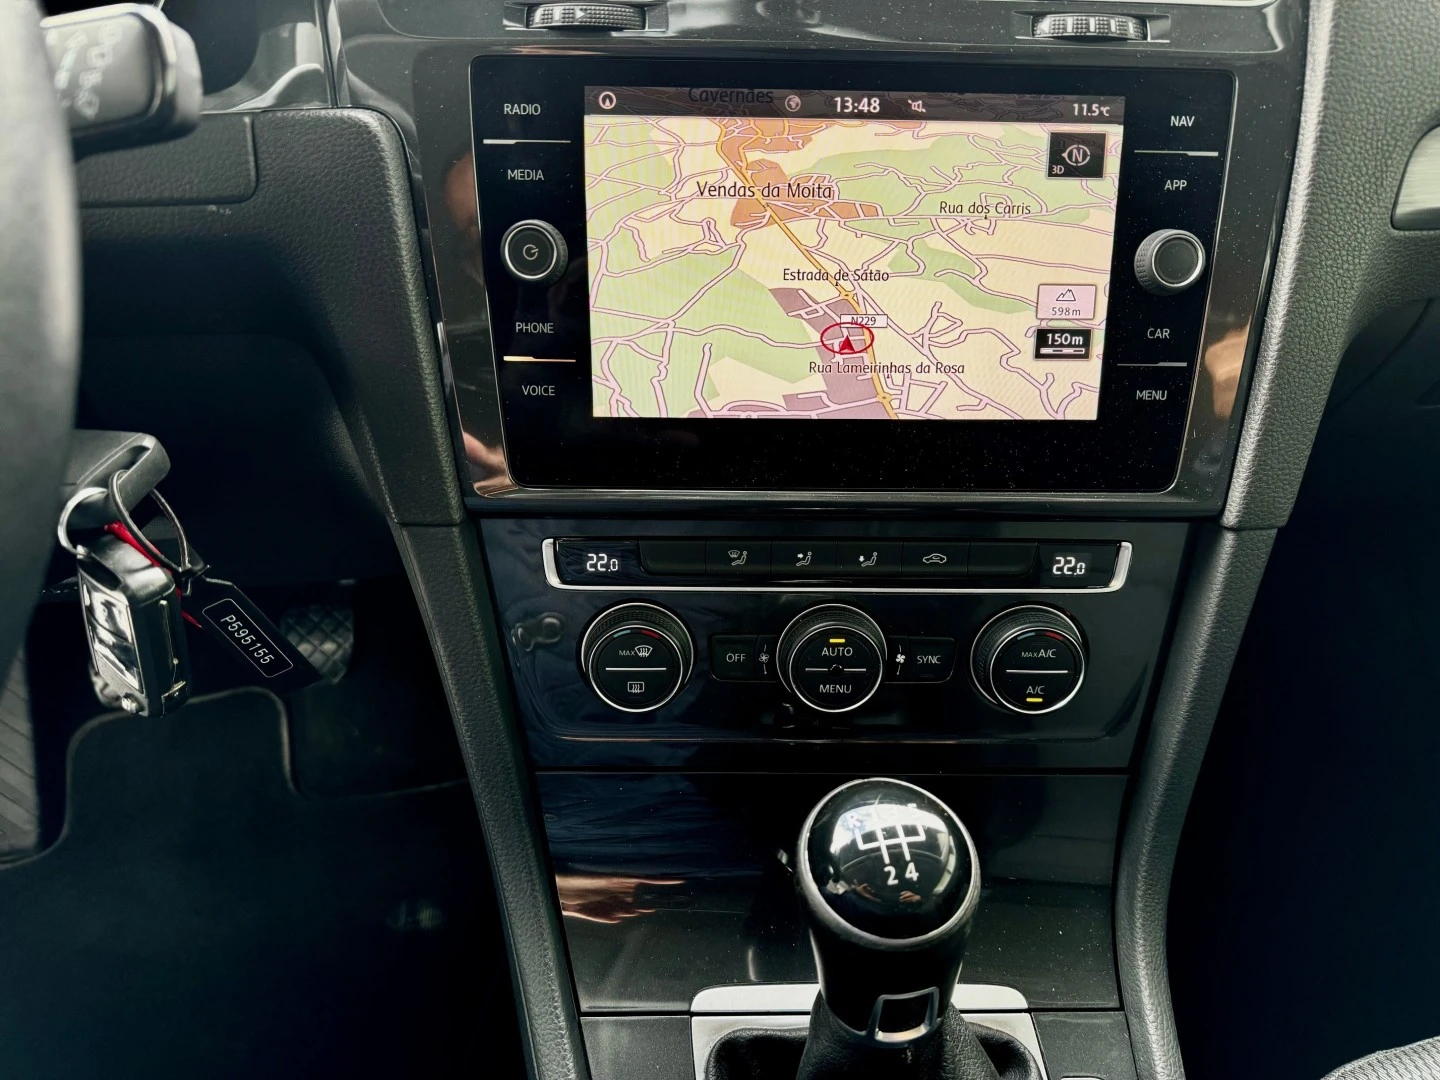 VW Golf Variant 1.6 TDi GPS Edition